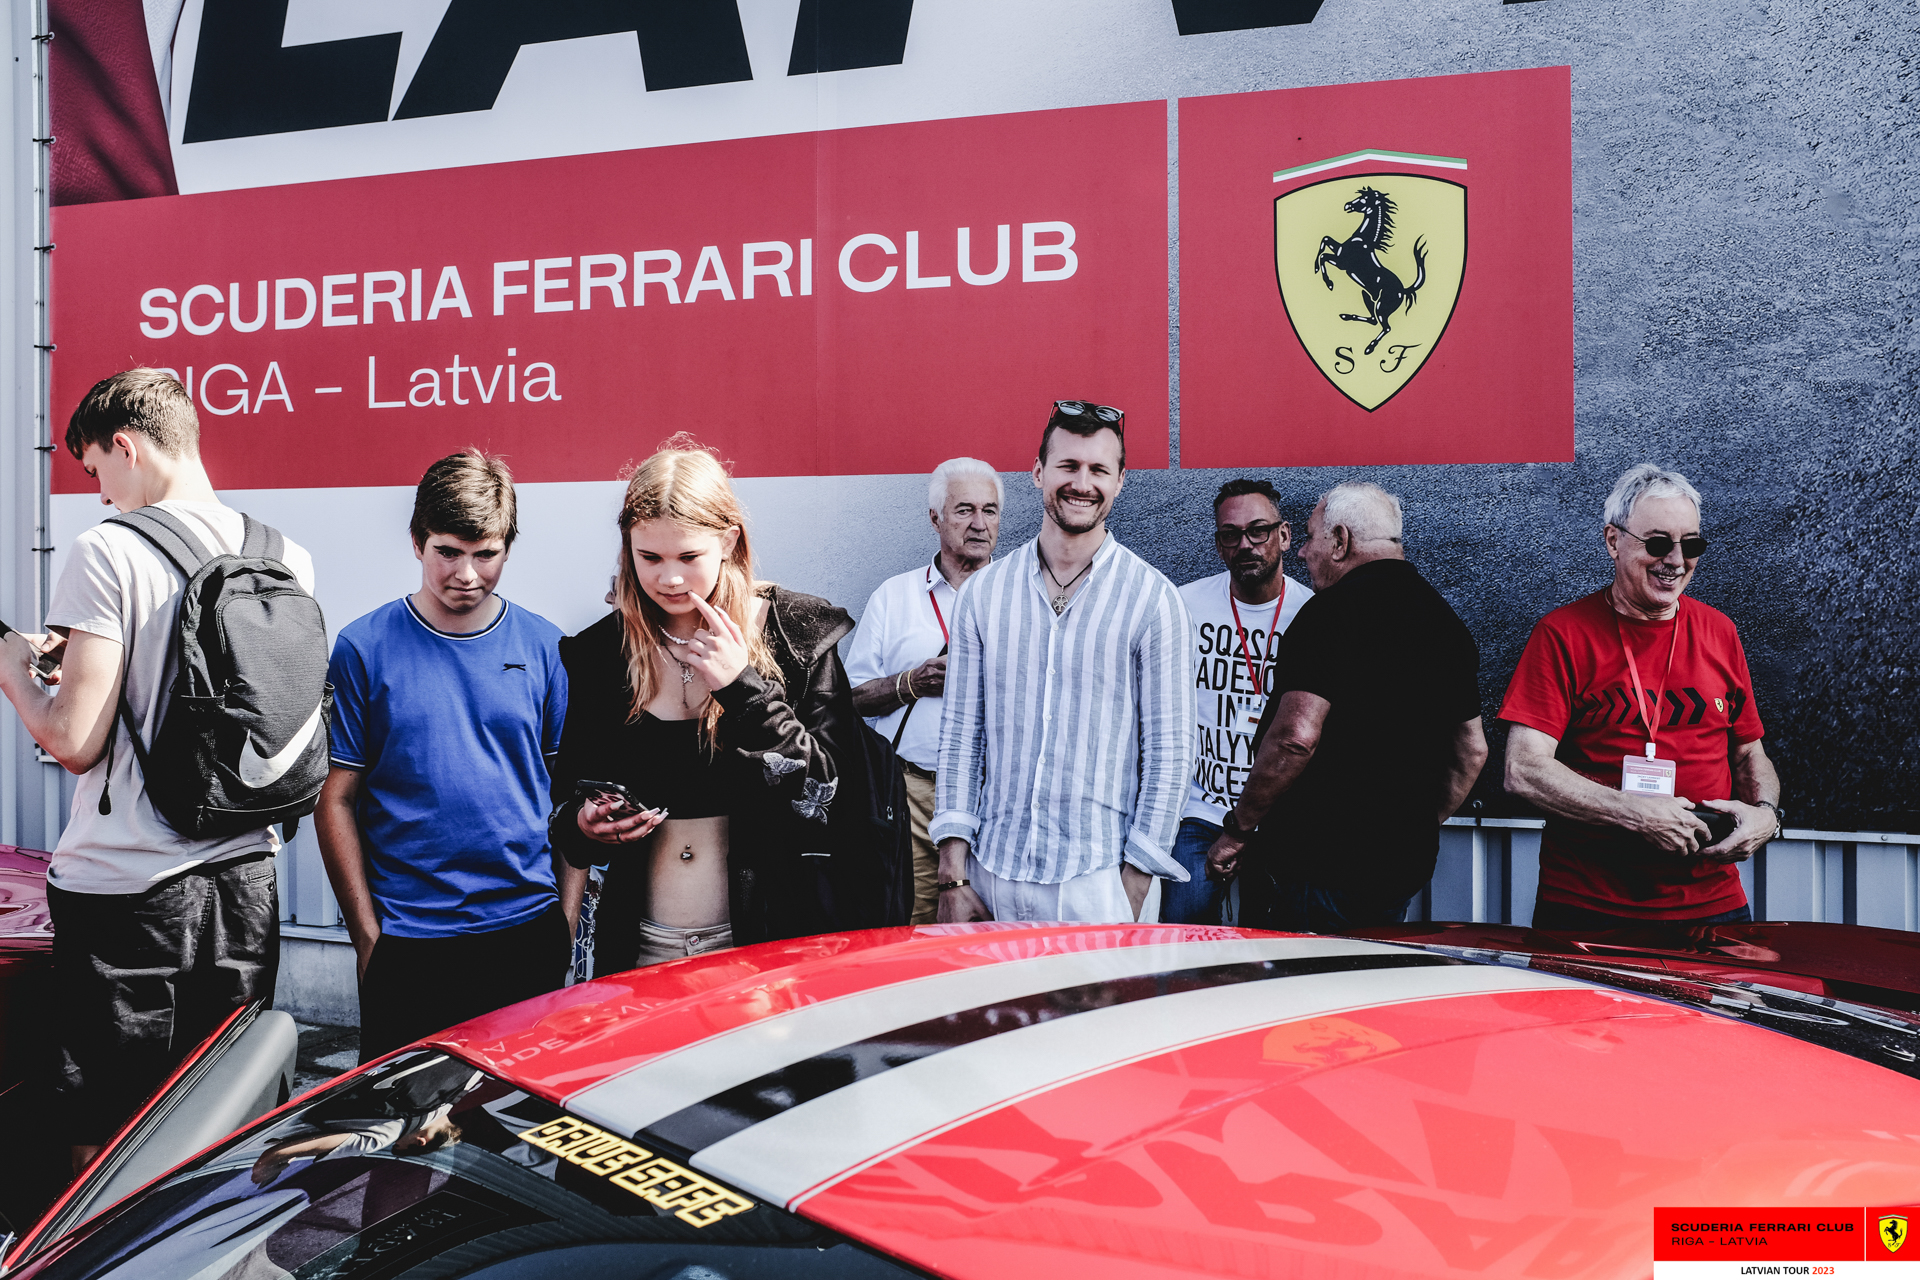 Ferrari owners with some Ferrari fans.